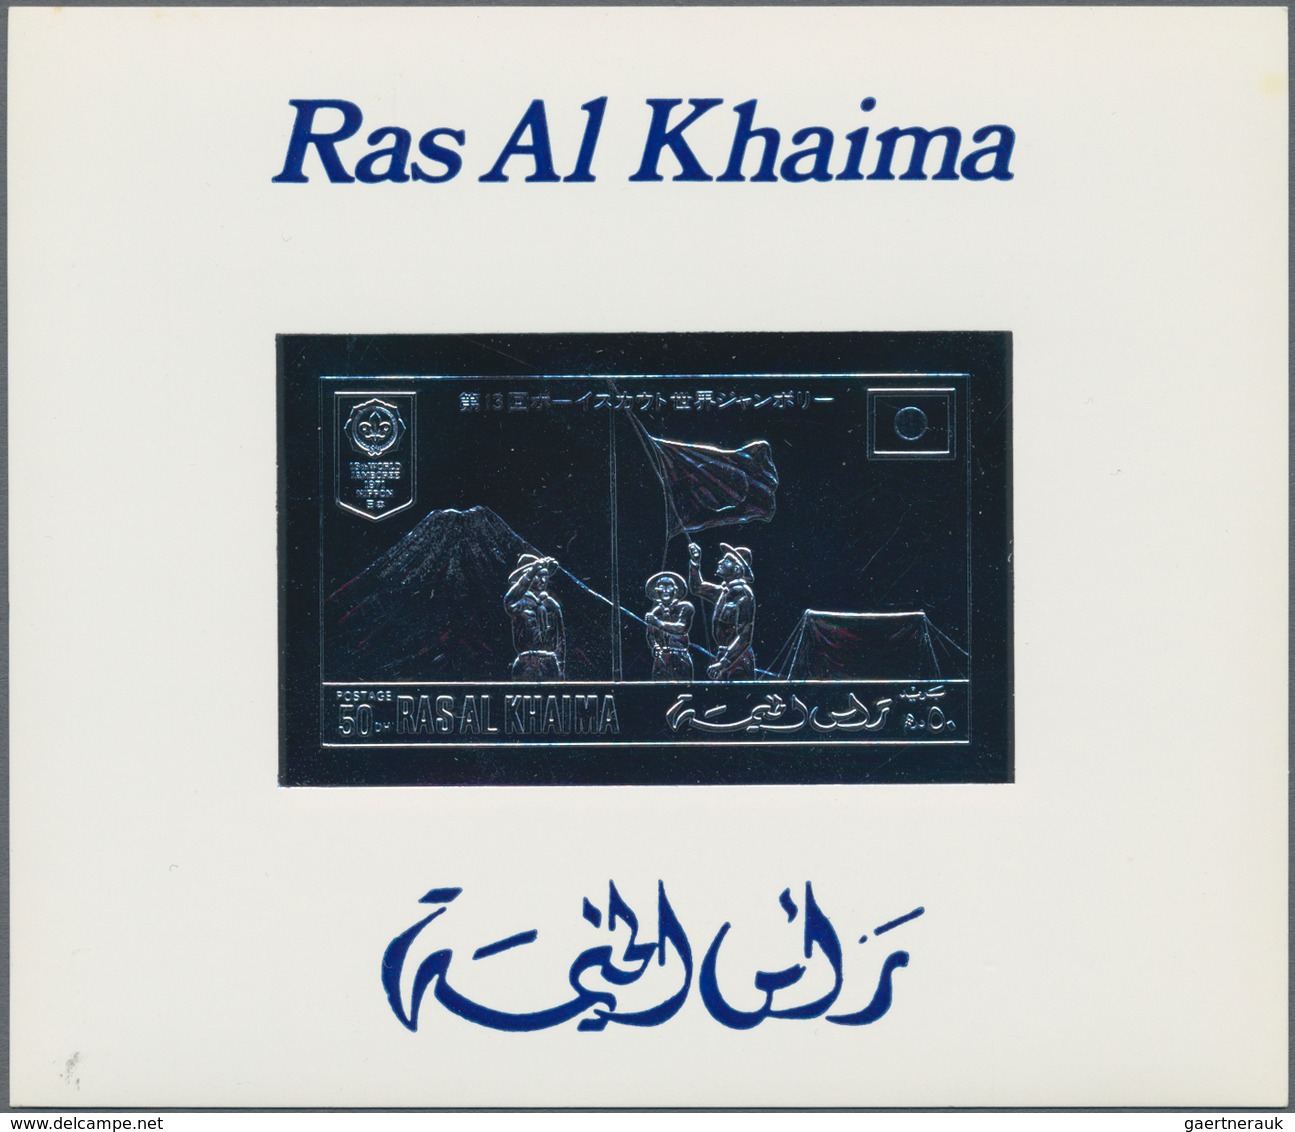 Naher Osten: 1965/1972, comprehensive MNH accumulation in a box, comprising Ras al Khaima, Ajman, Sh